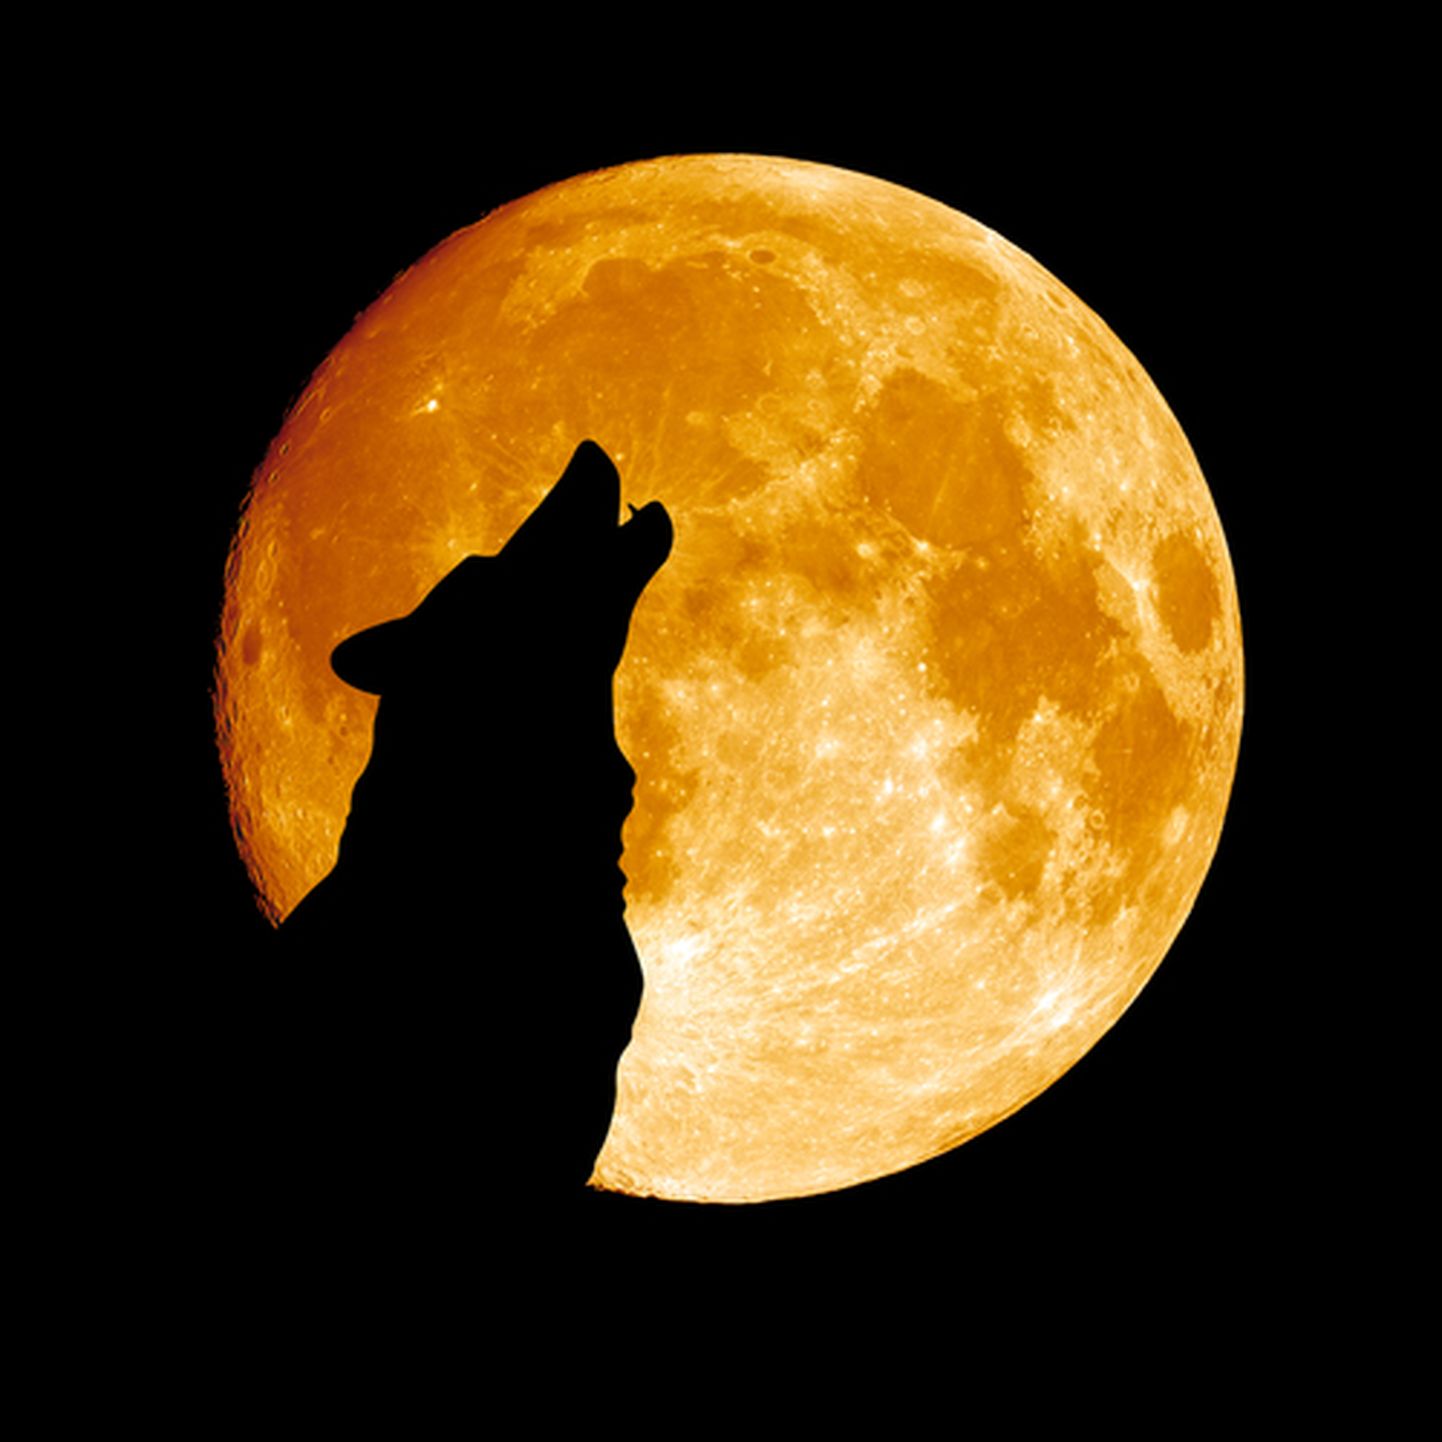 Волк воет на Луну. Иллюстративное фото